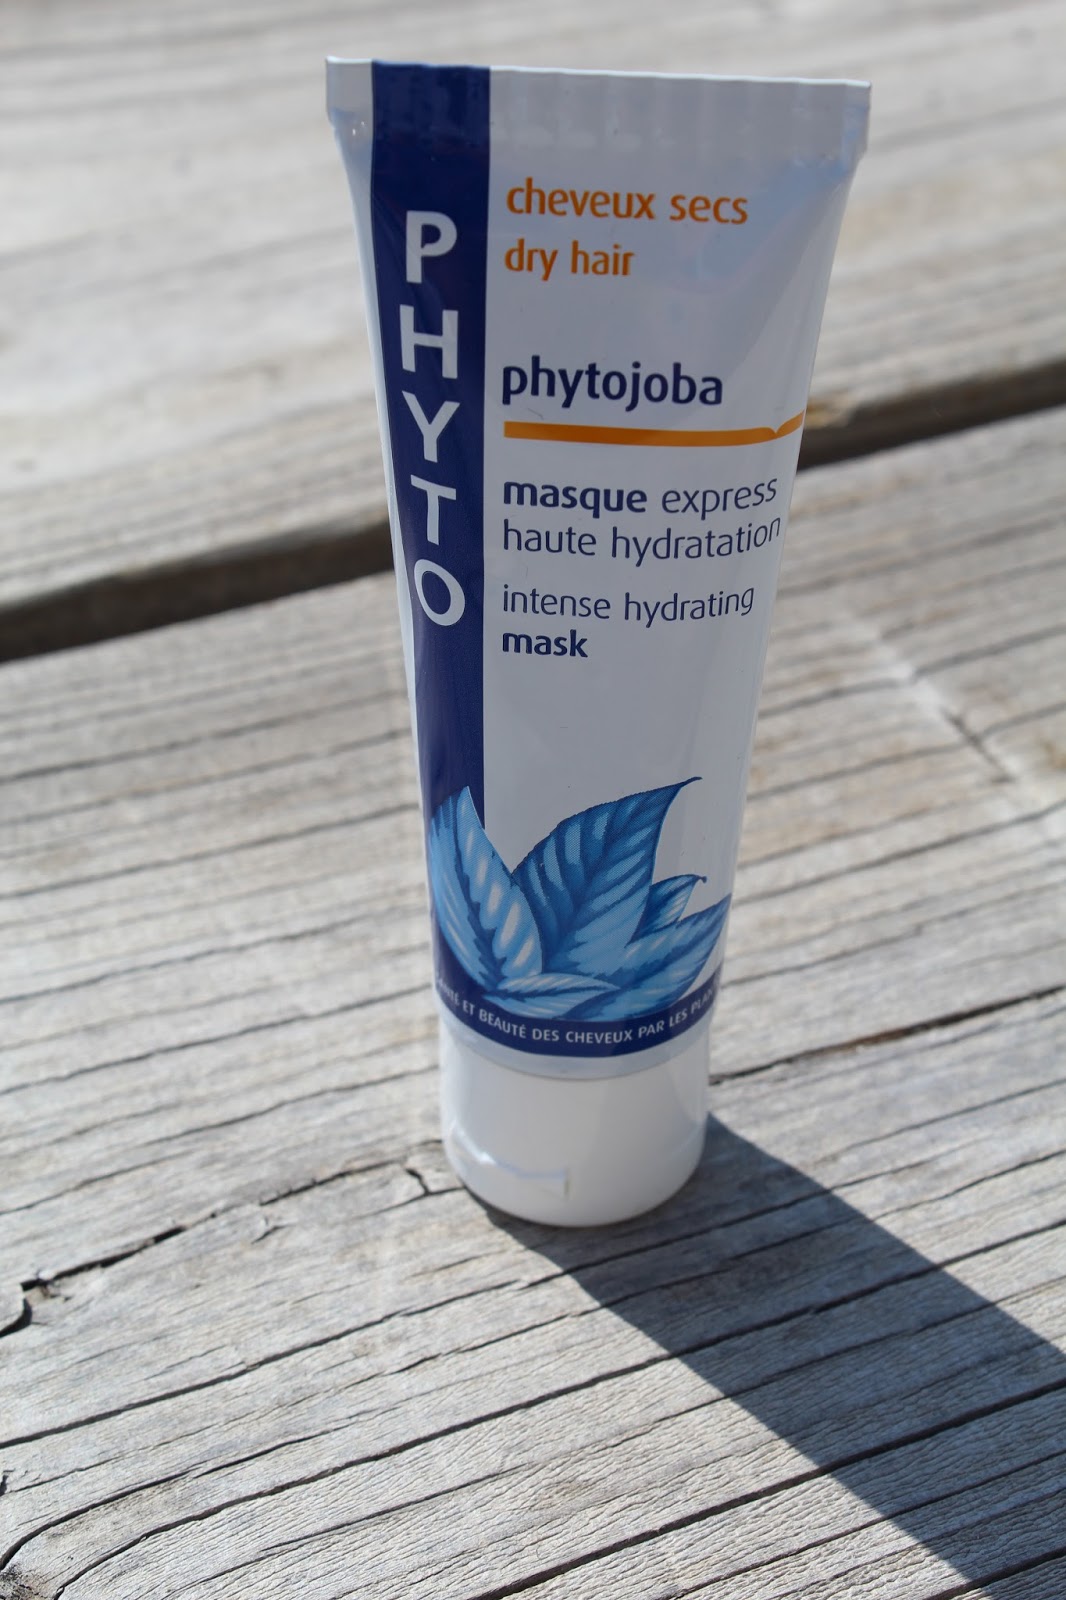 Phytojoba intense hydrating mask for dry hair